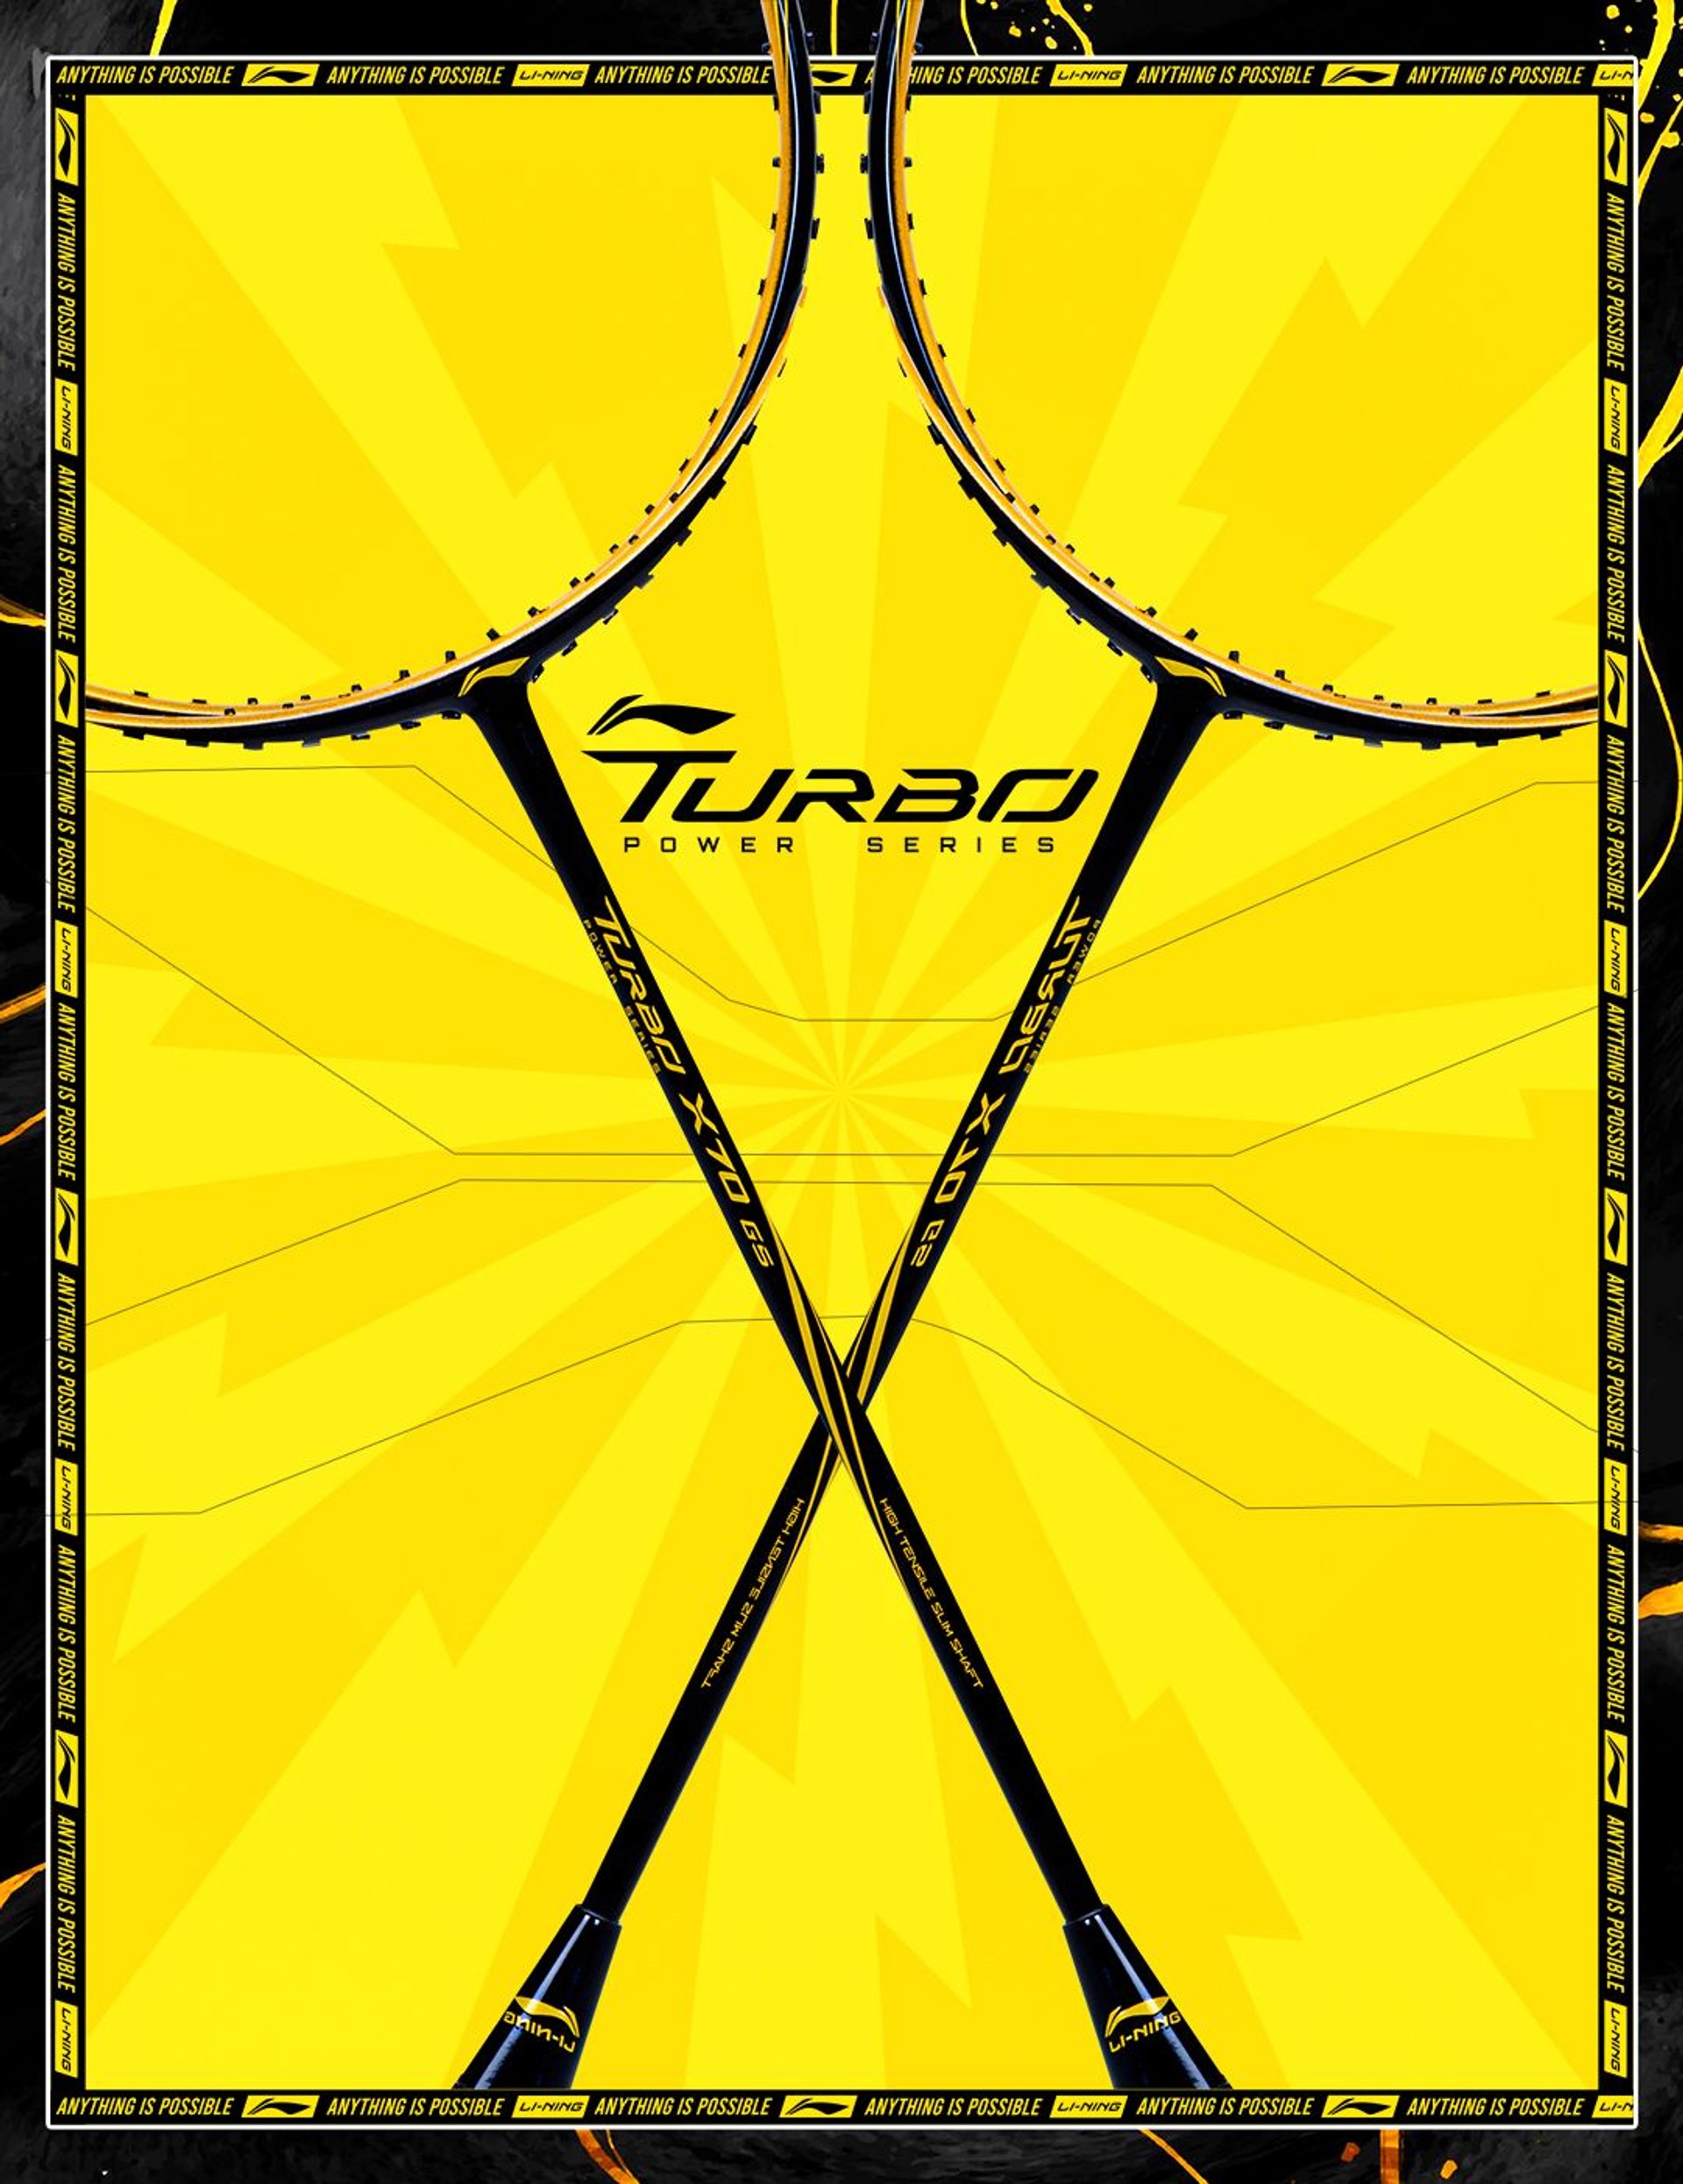 Turbo X G5 power series badminton racket